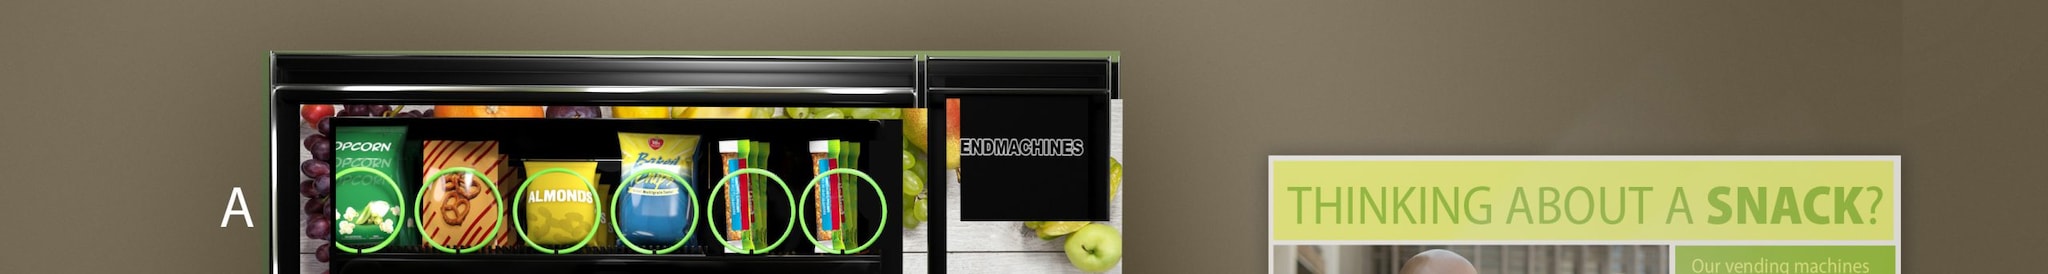 Row A - Food vending machine